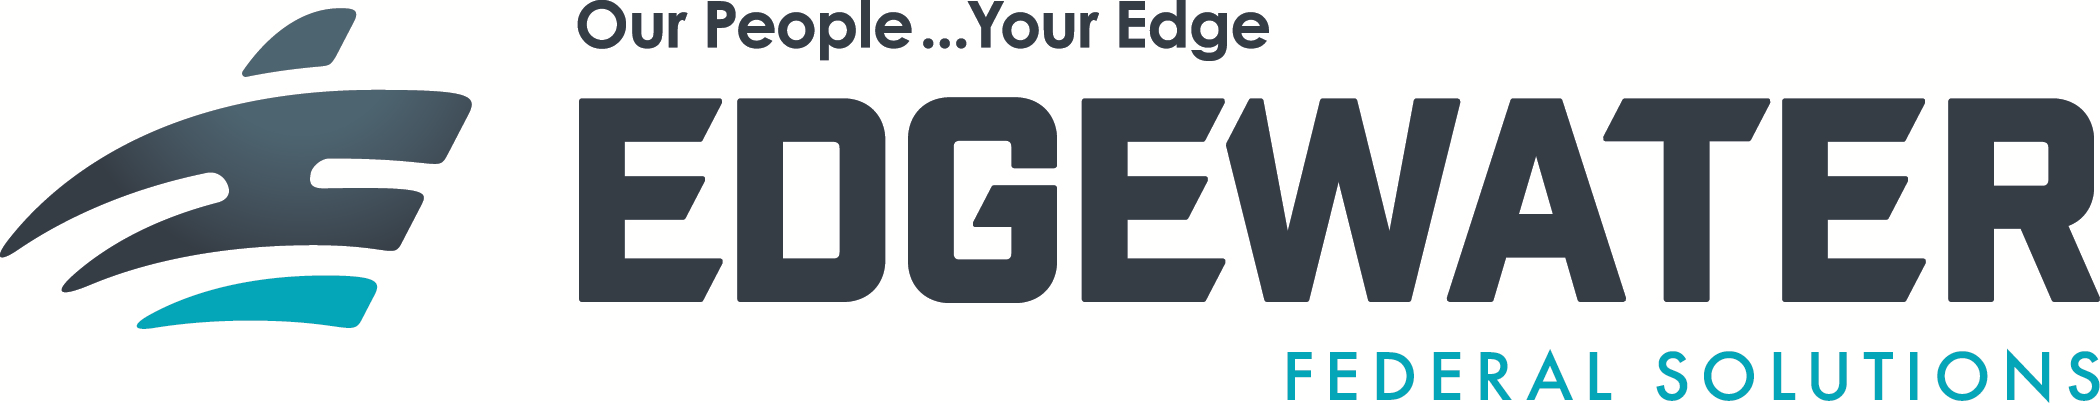 Edgewater Federal Solutions, Inc logo